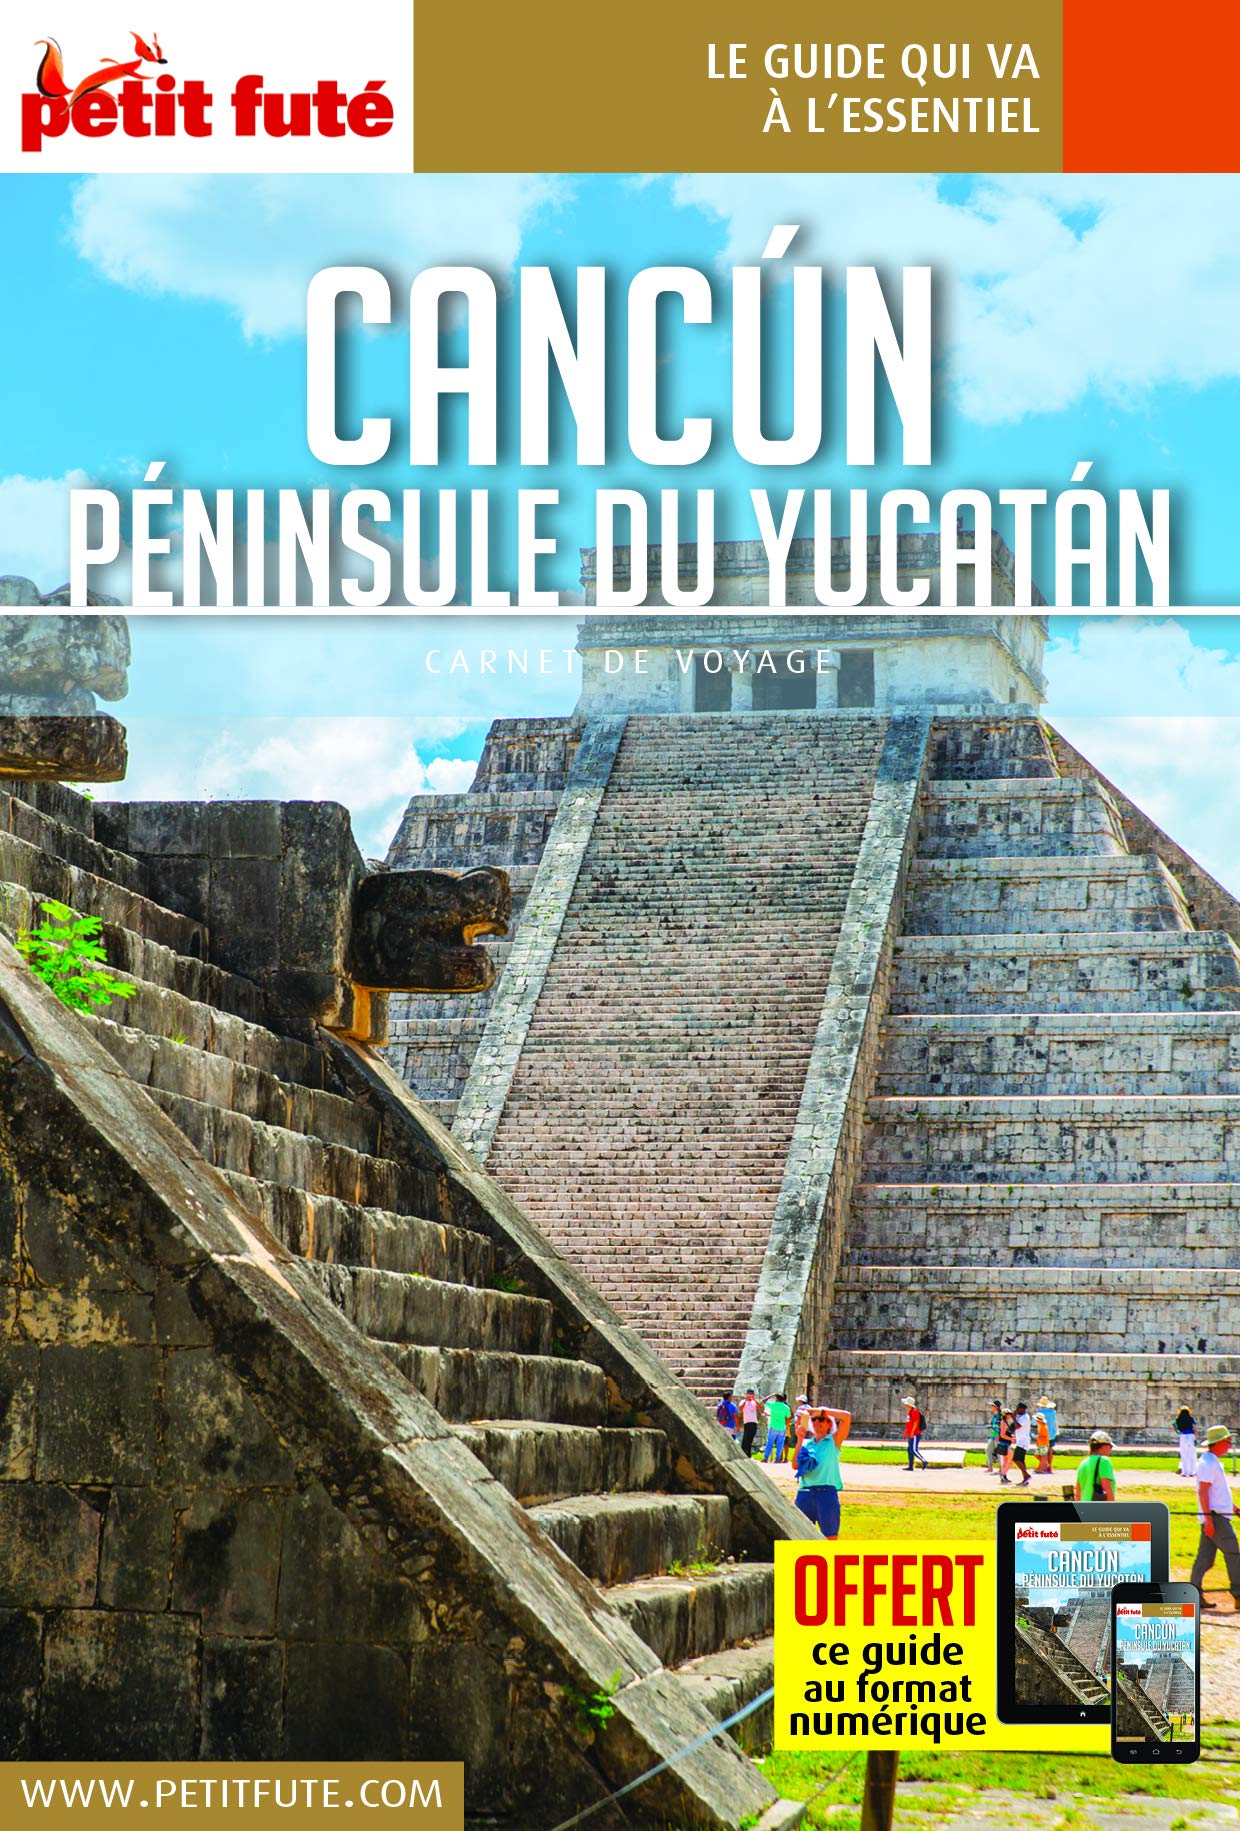 Guide Cancun - Yucatan 2019 Carnet Petit Futé